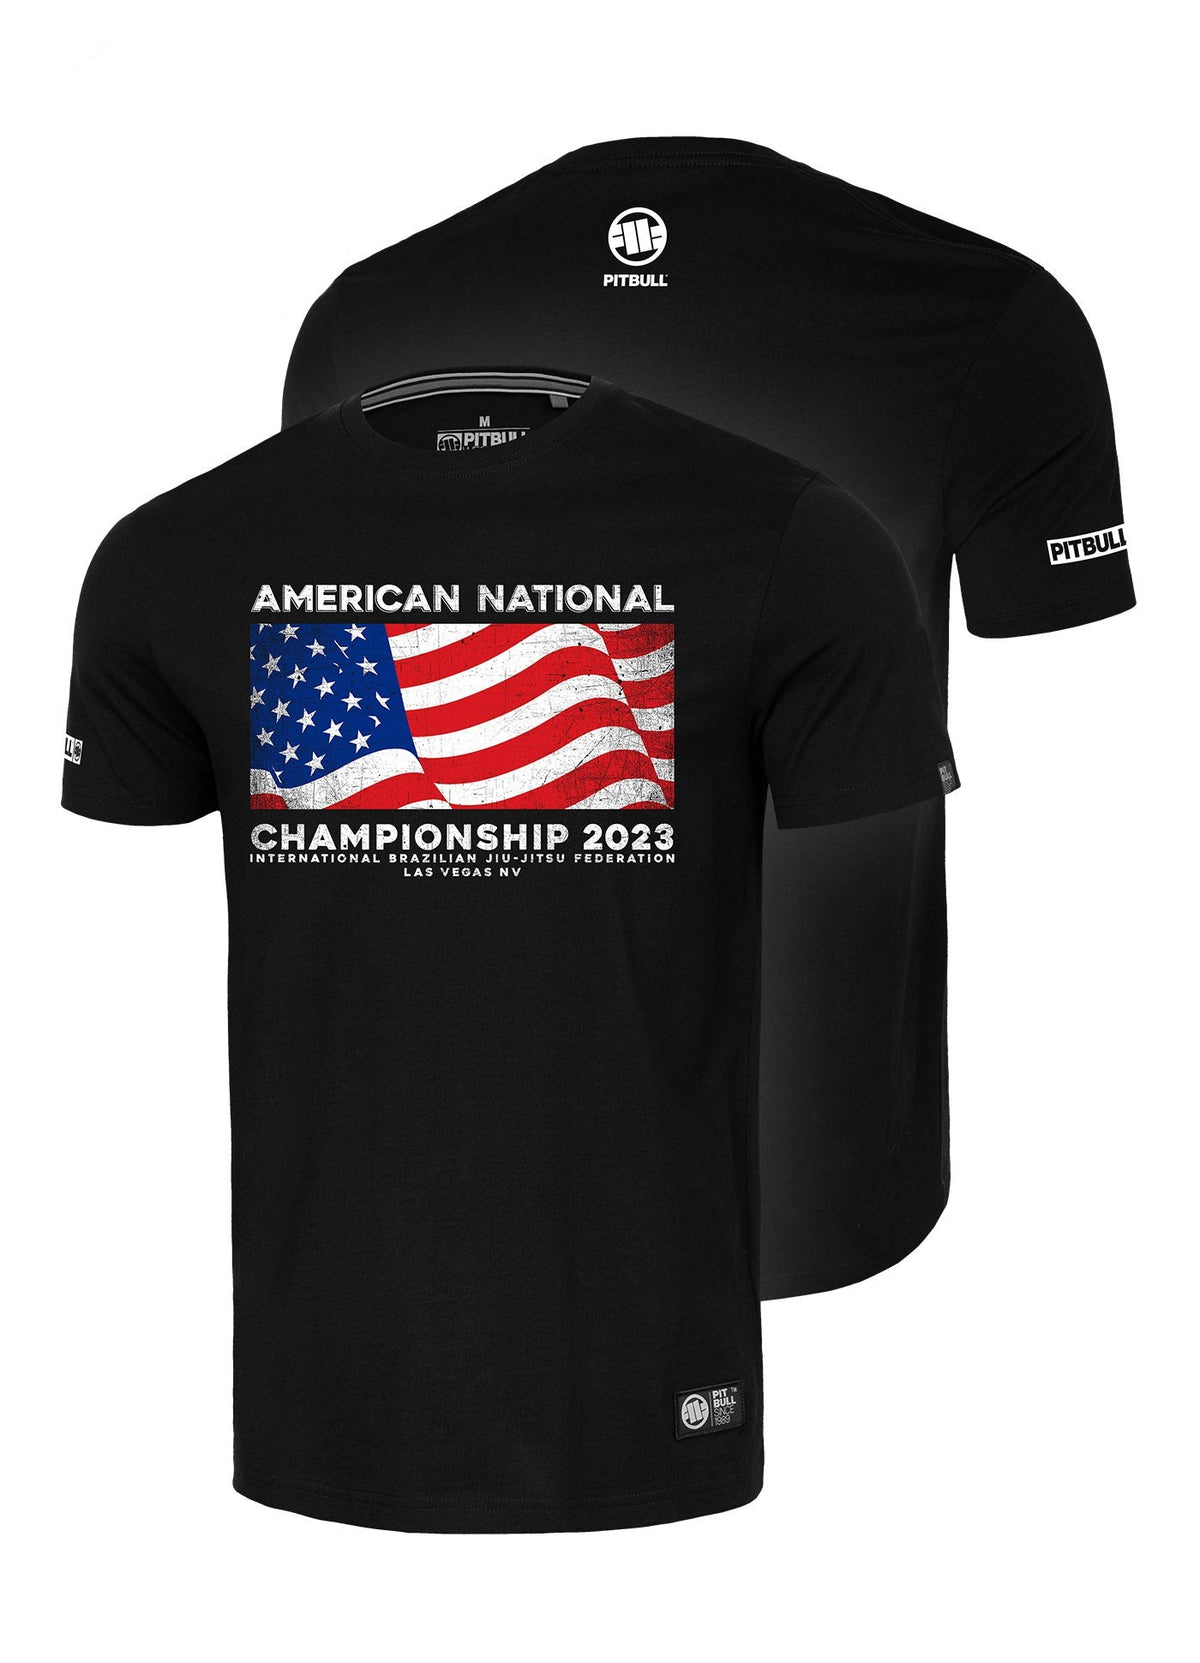 American National Championship 2023 Flag Black T-shirt